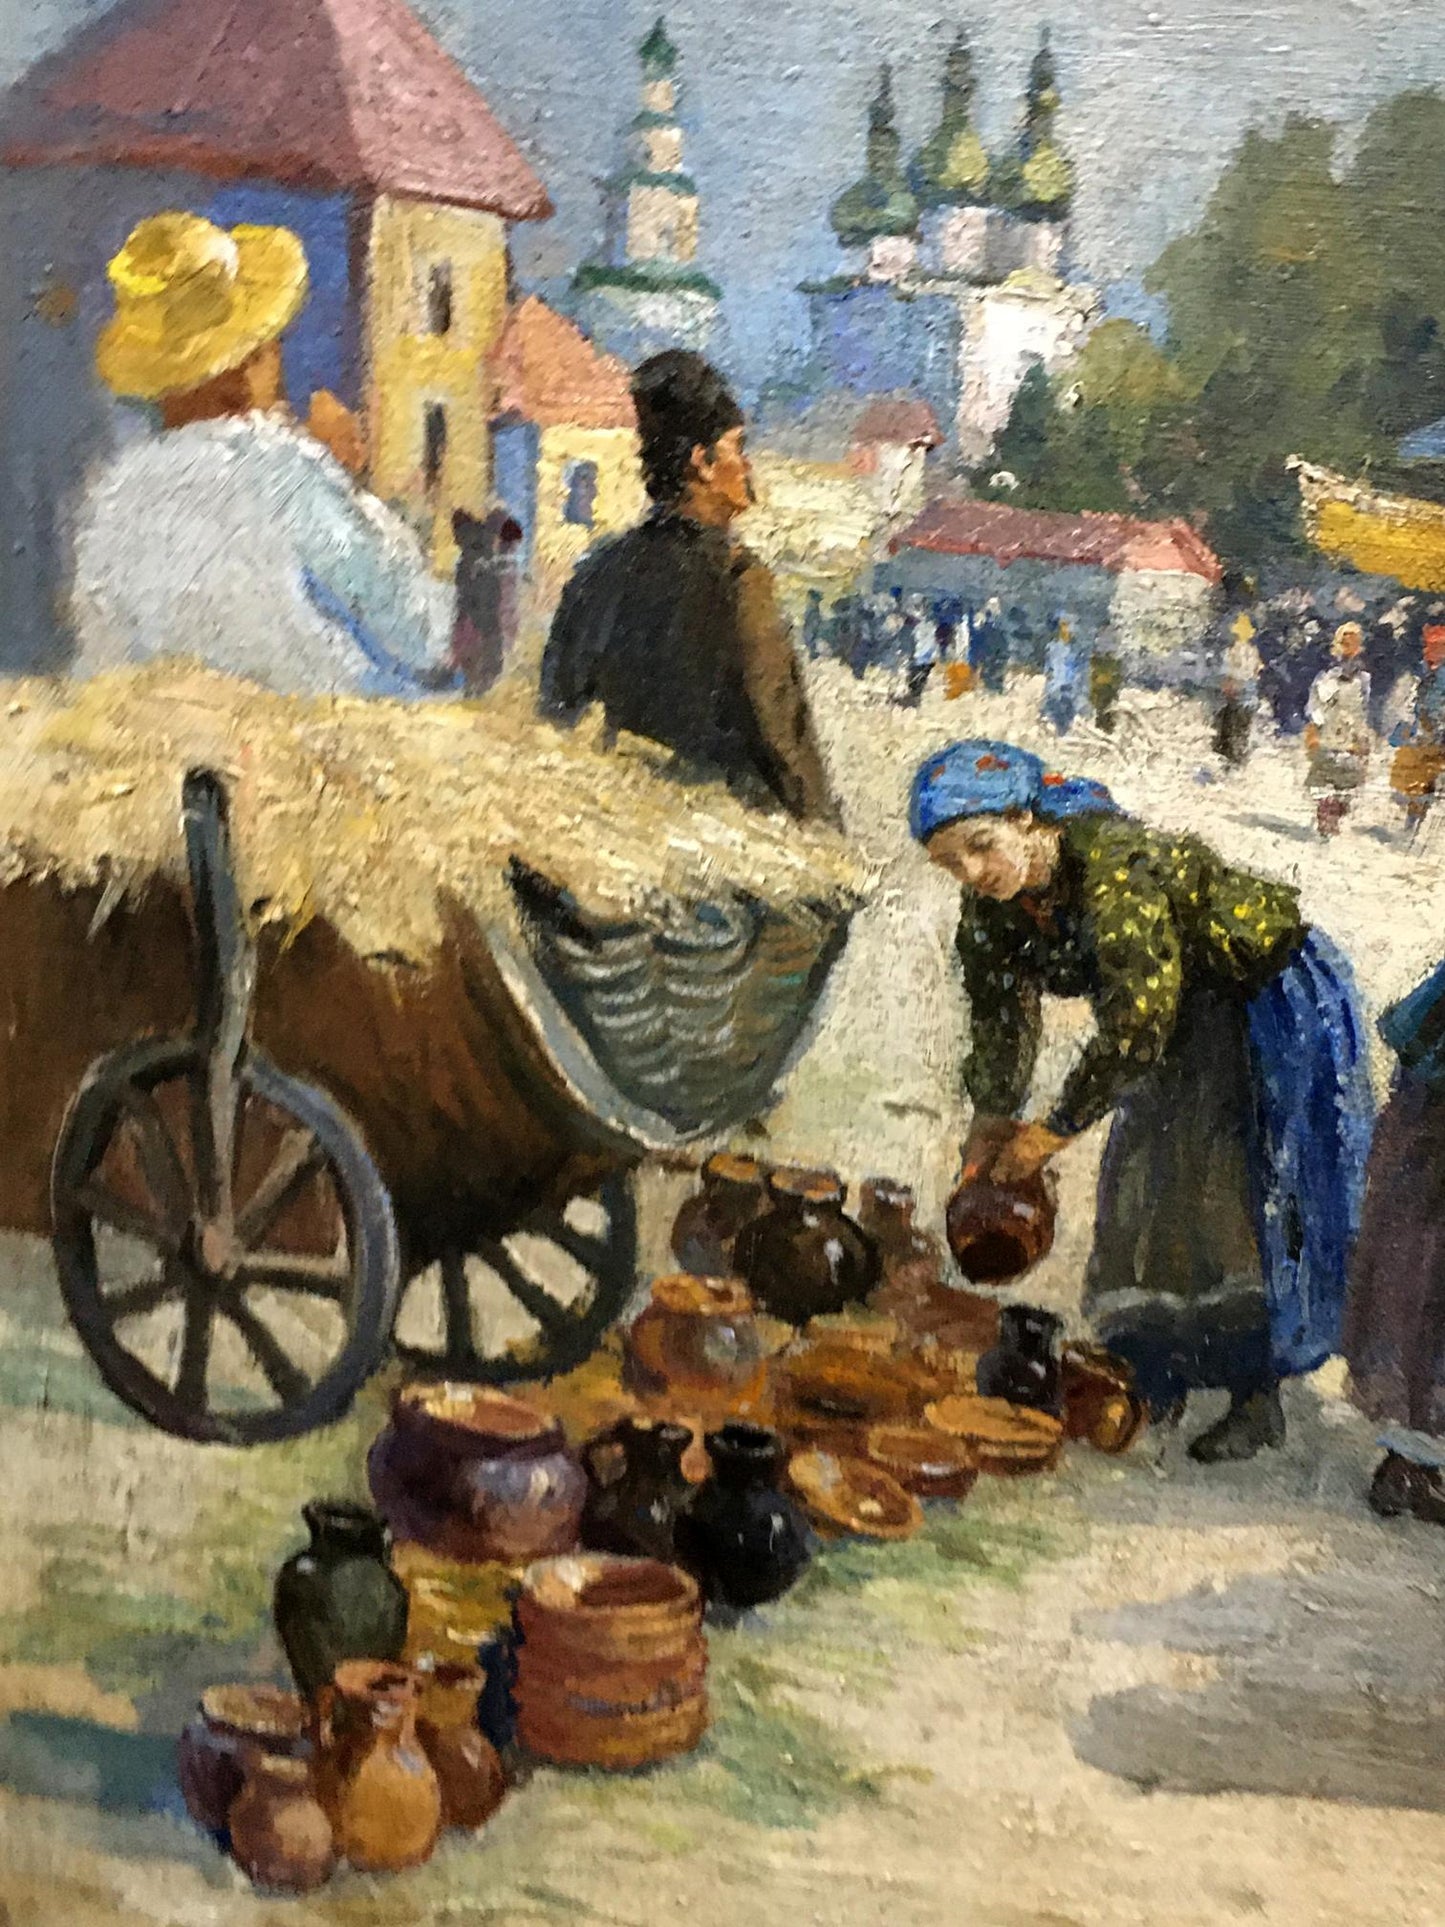 Oil painting Ilyinsky fair in Romny Dubinchuk Victor